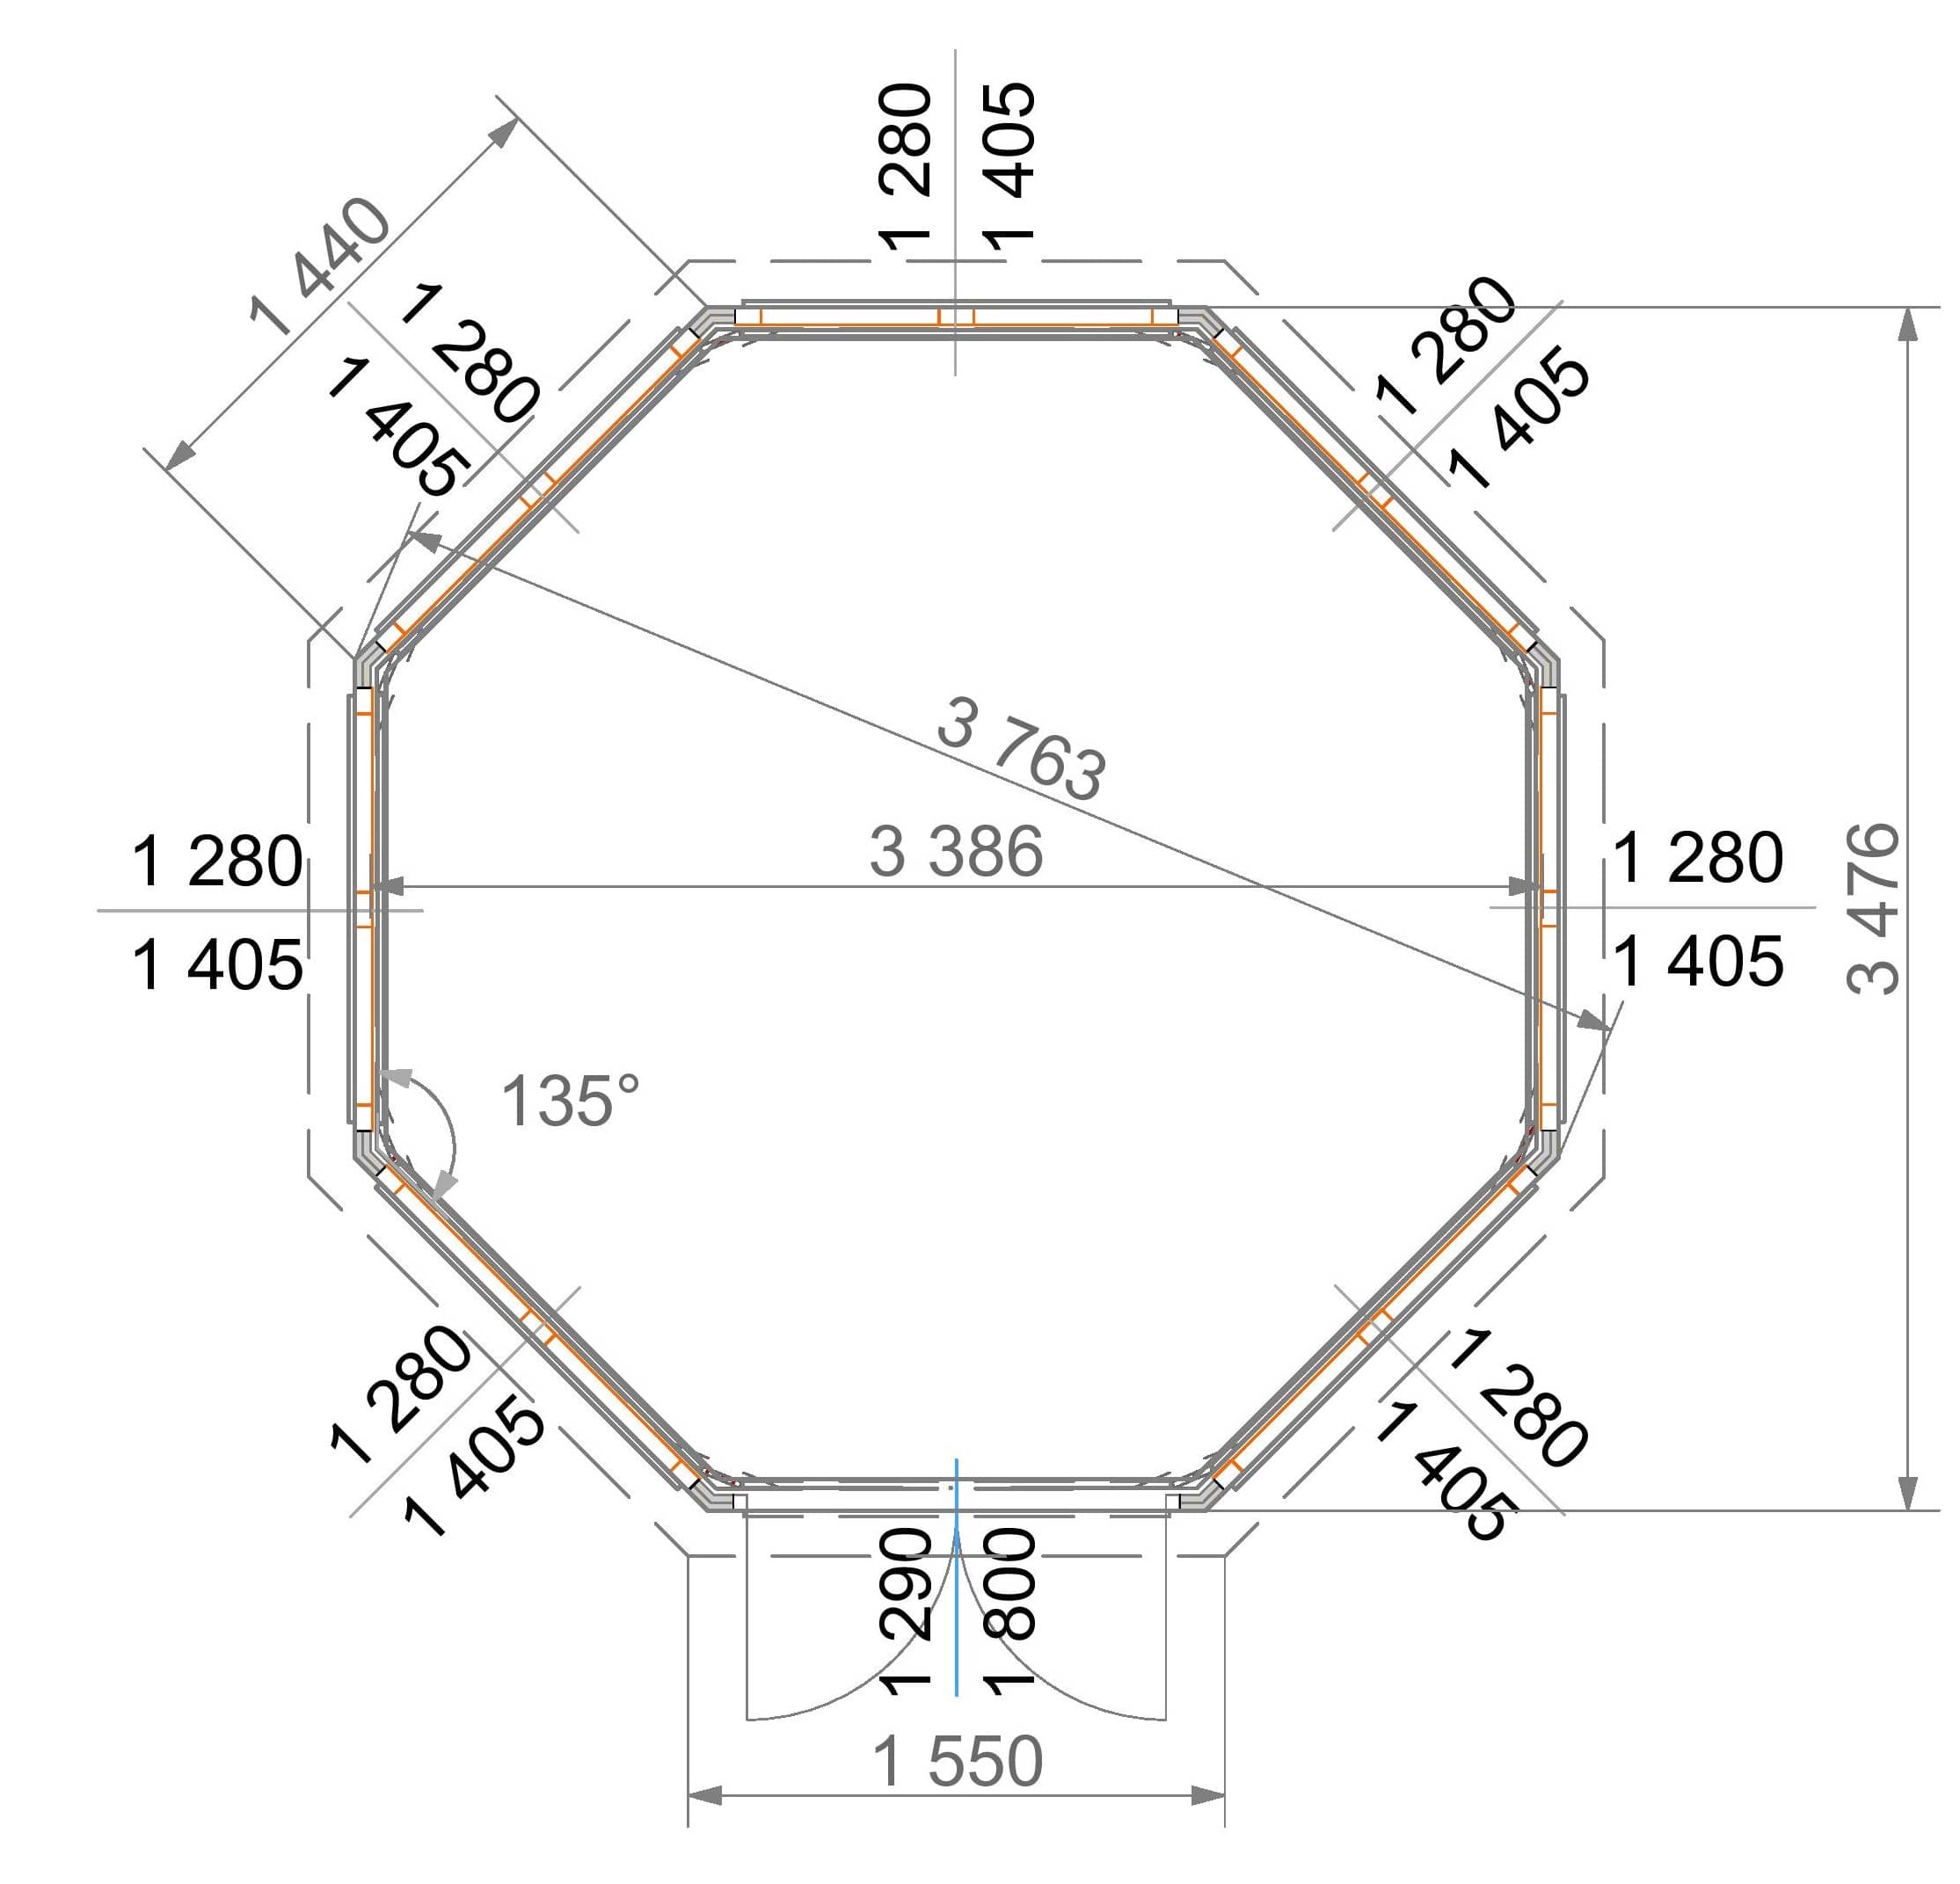 Pavilion 10 m² plan